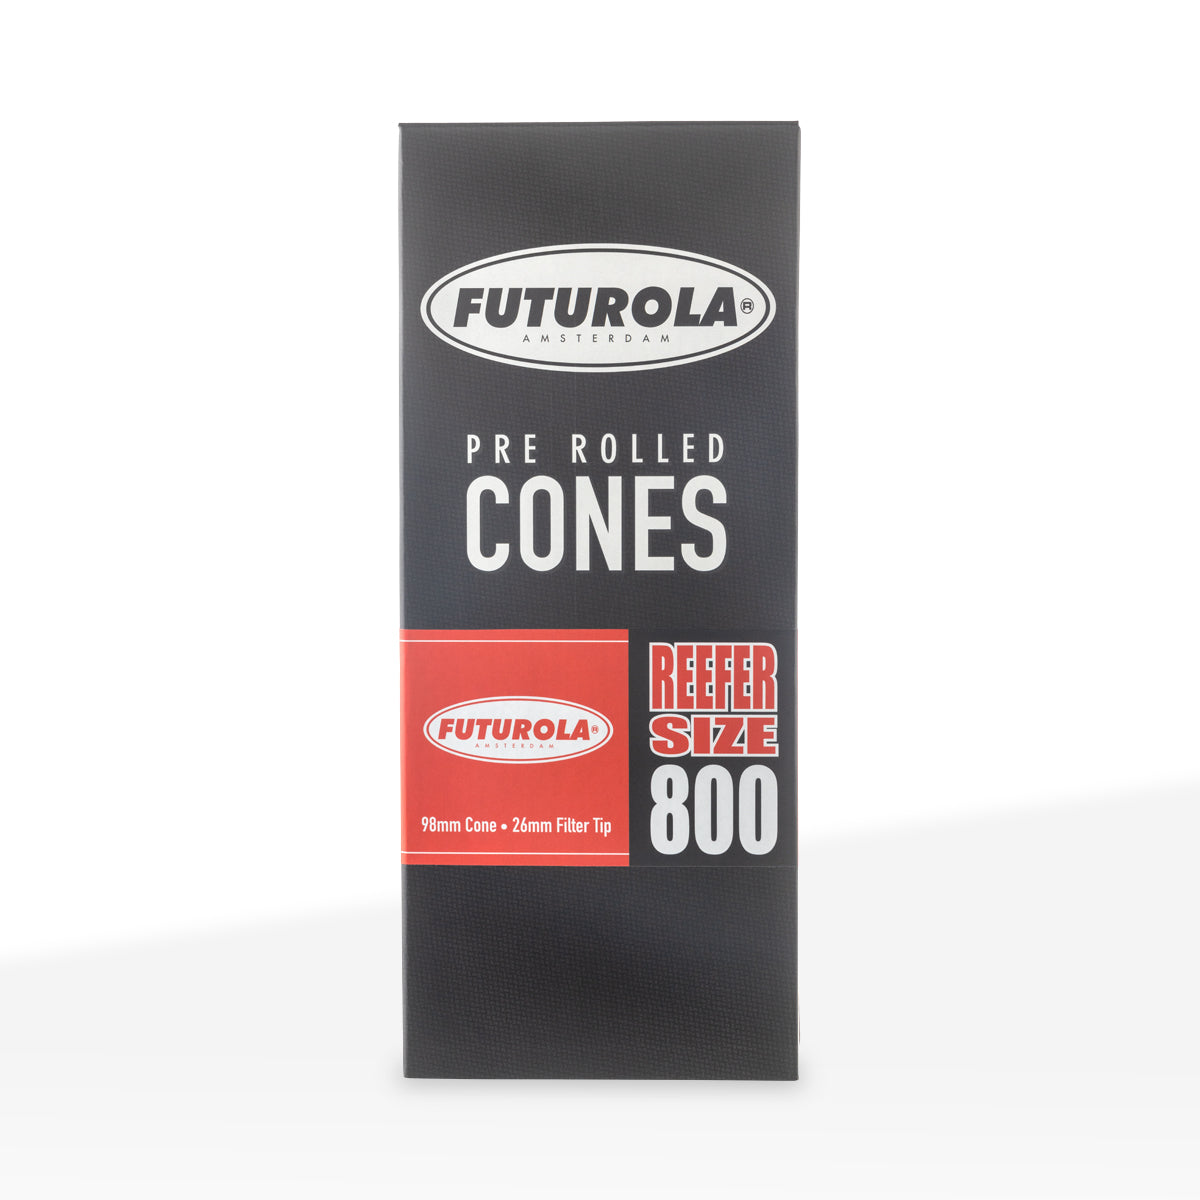 FUTUROLA® | Pre-Rolled Cones Reefer Size | 98mm - White Paper - 800 Count